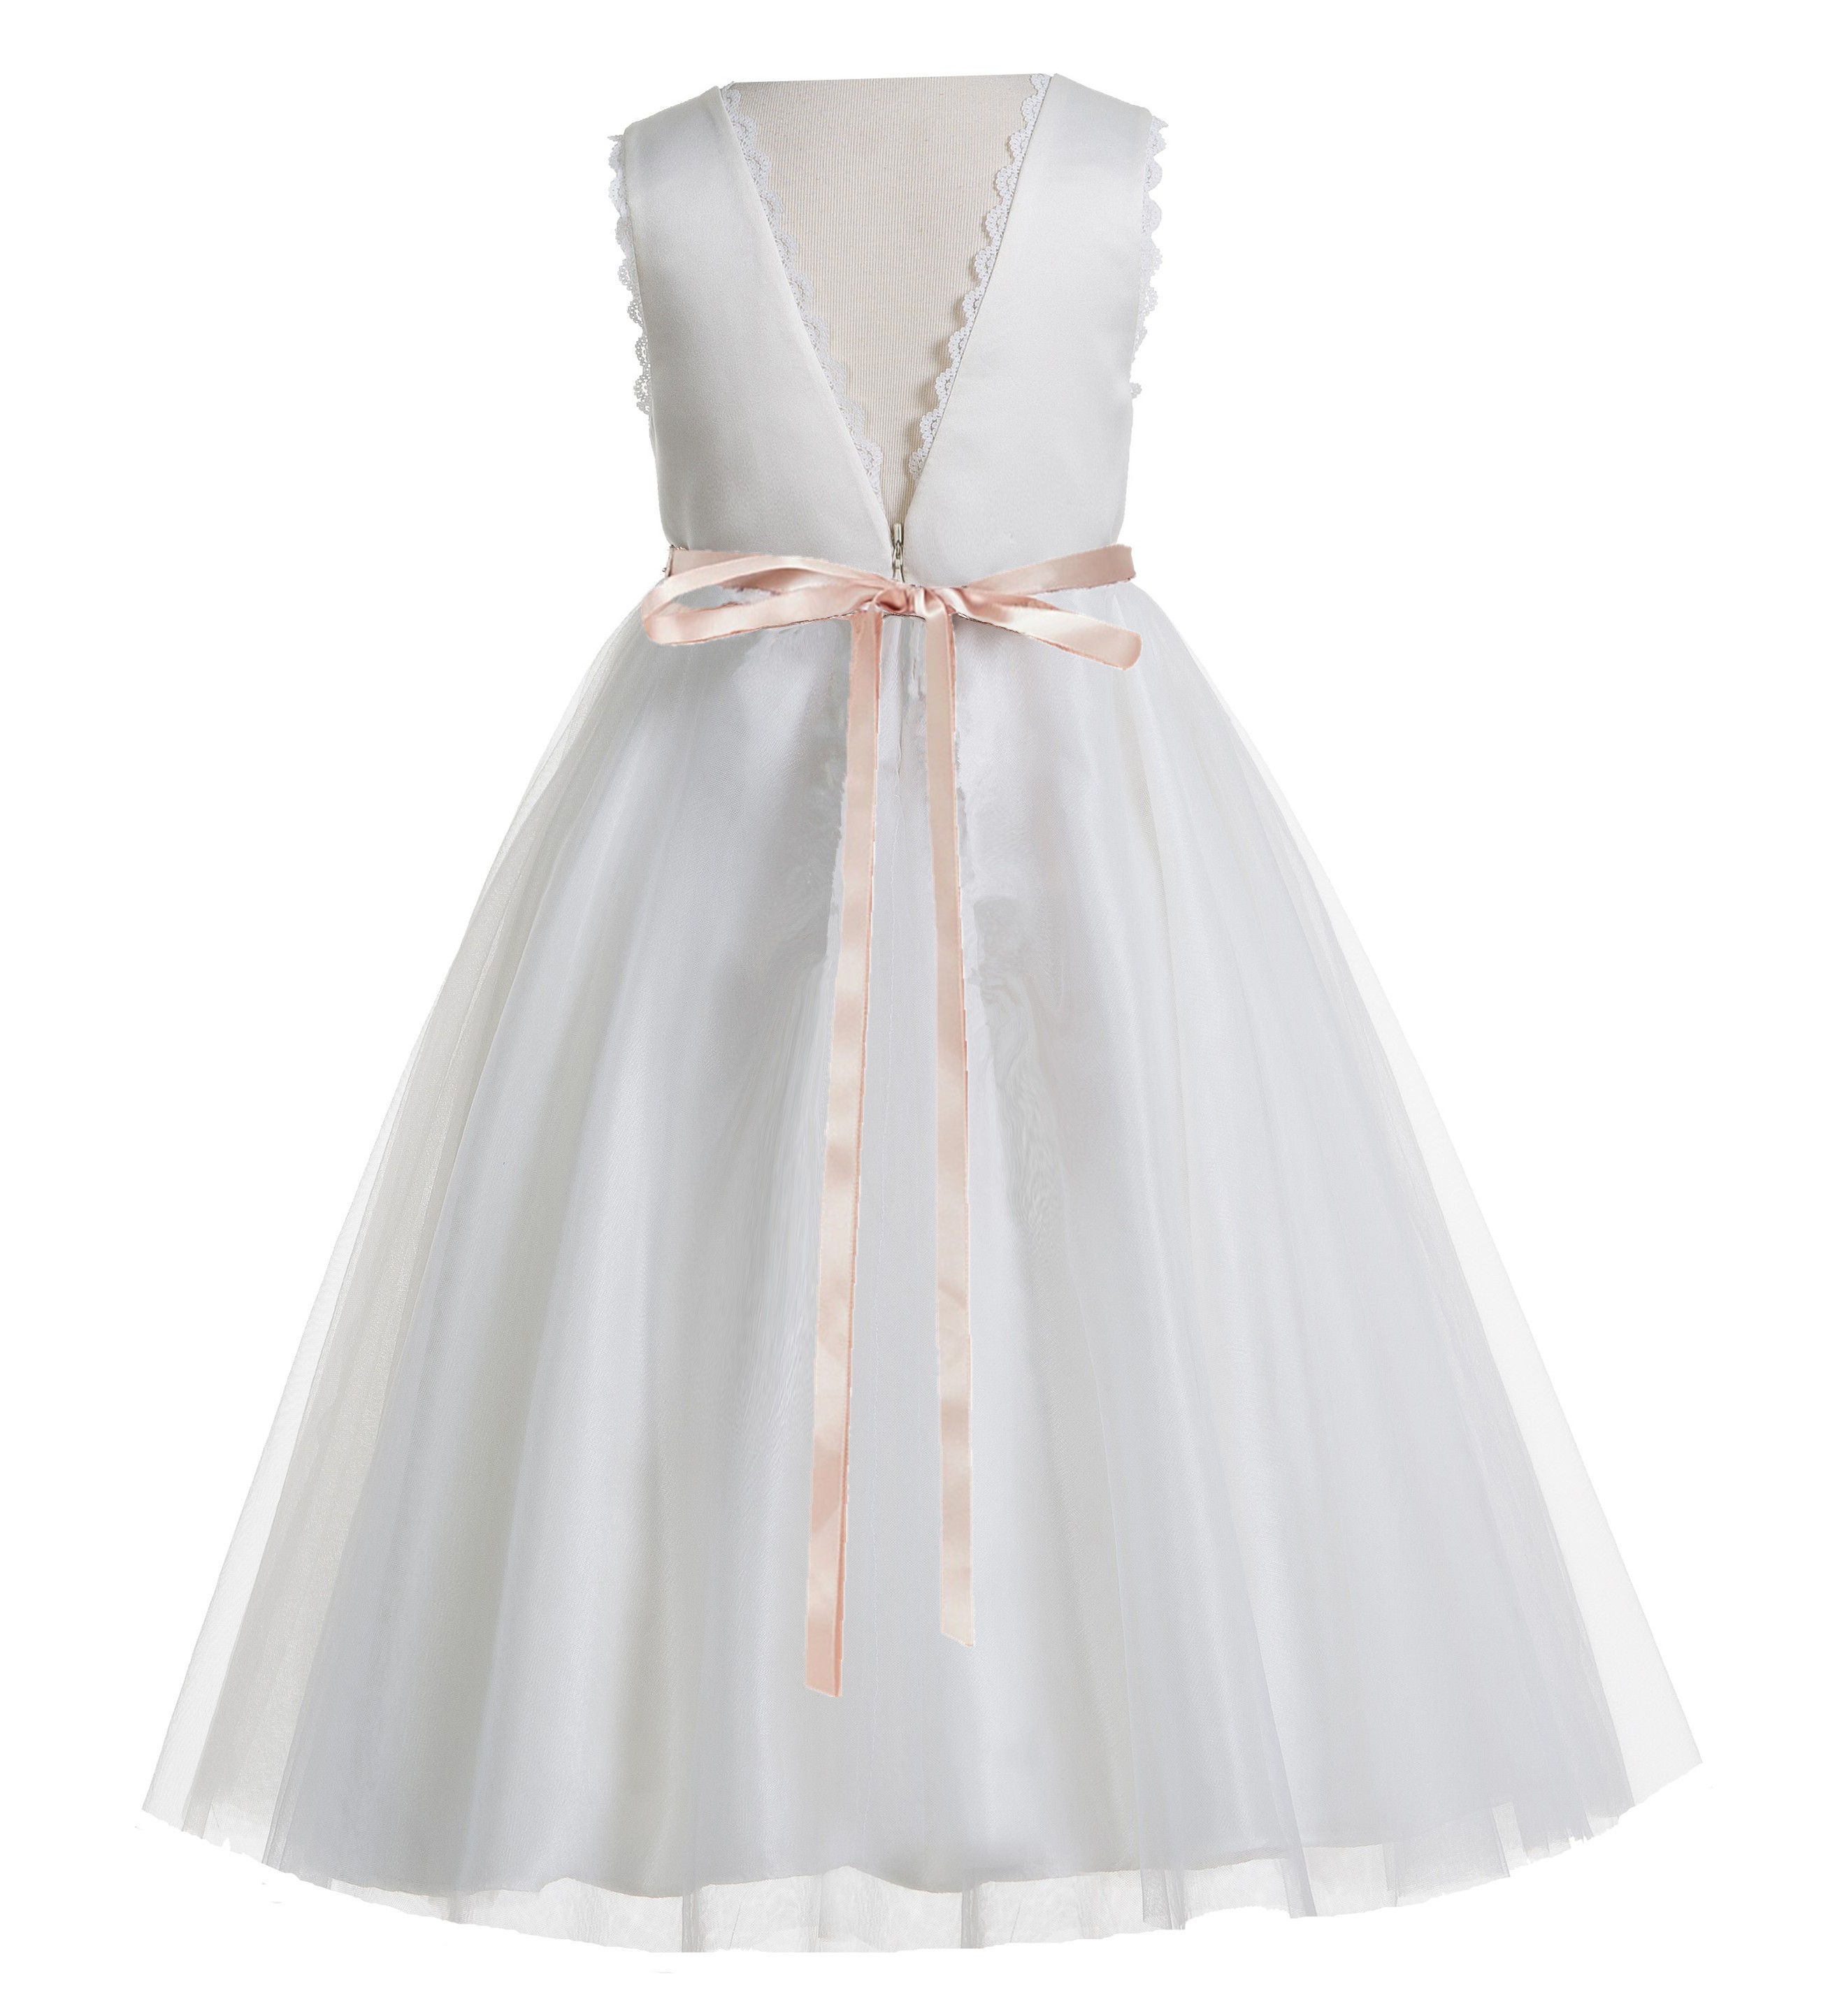 Ivory / Blush Pink V-Back Lace Edge Flower Girl Dress 183